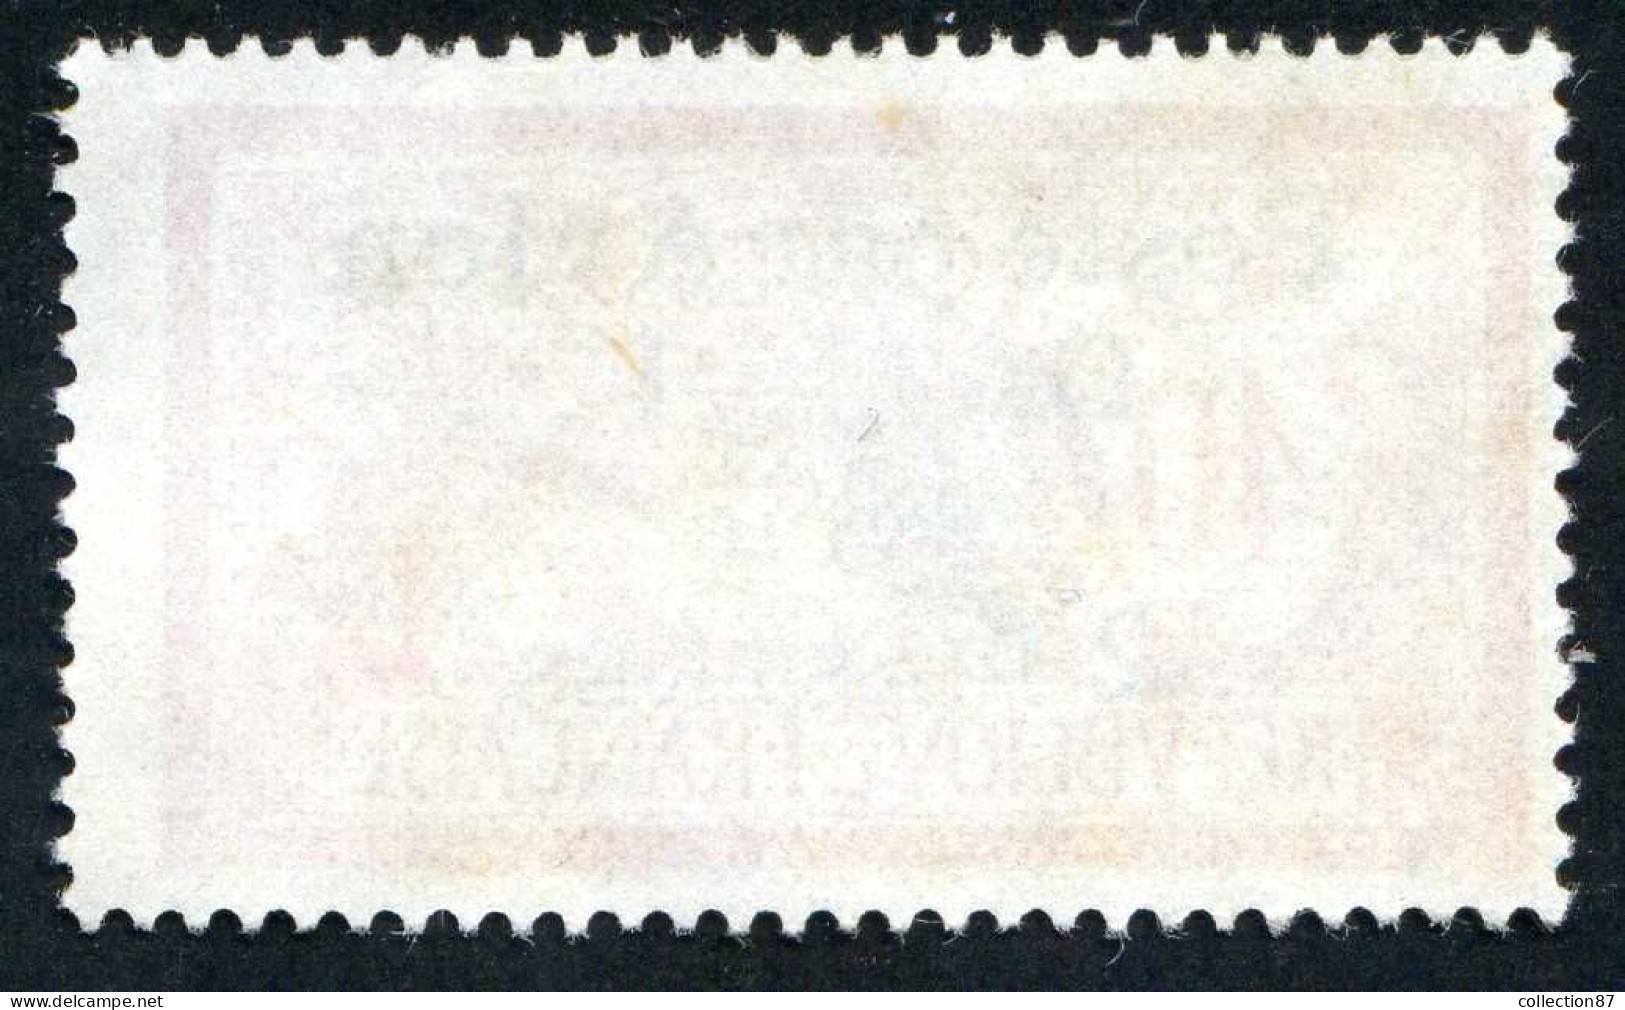 REF 086 > SYRIE < PA N° 10 > Ø < Oblitéré < Ø Used > Poste Aérienne - Aéro - Air Mail - Posta Aerea